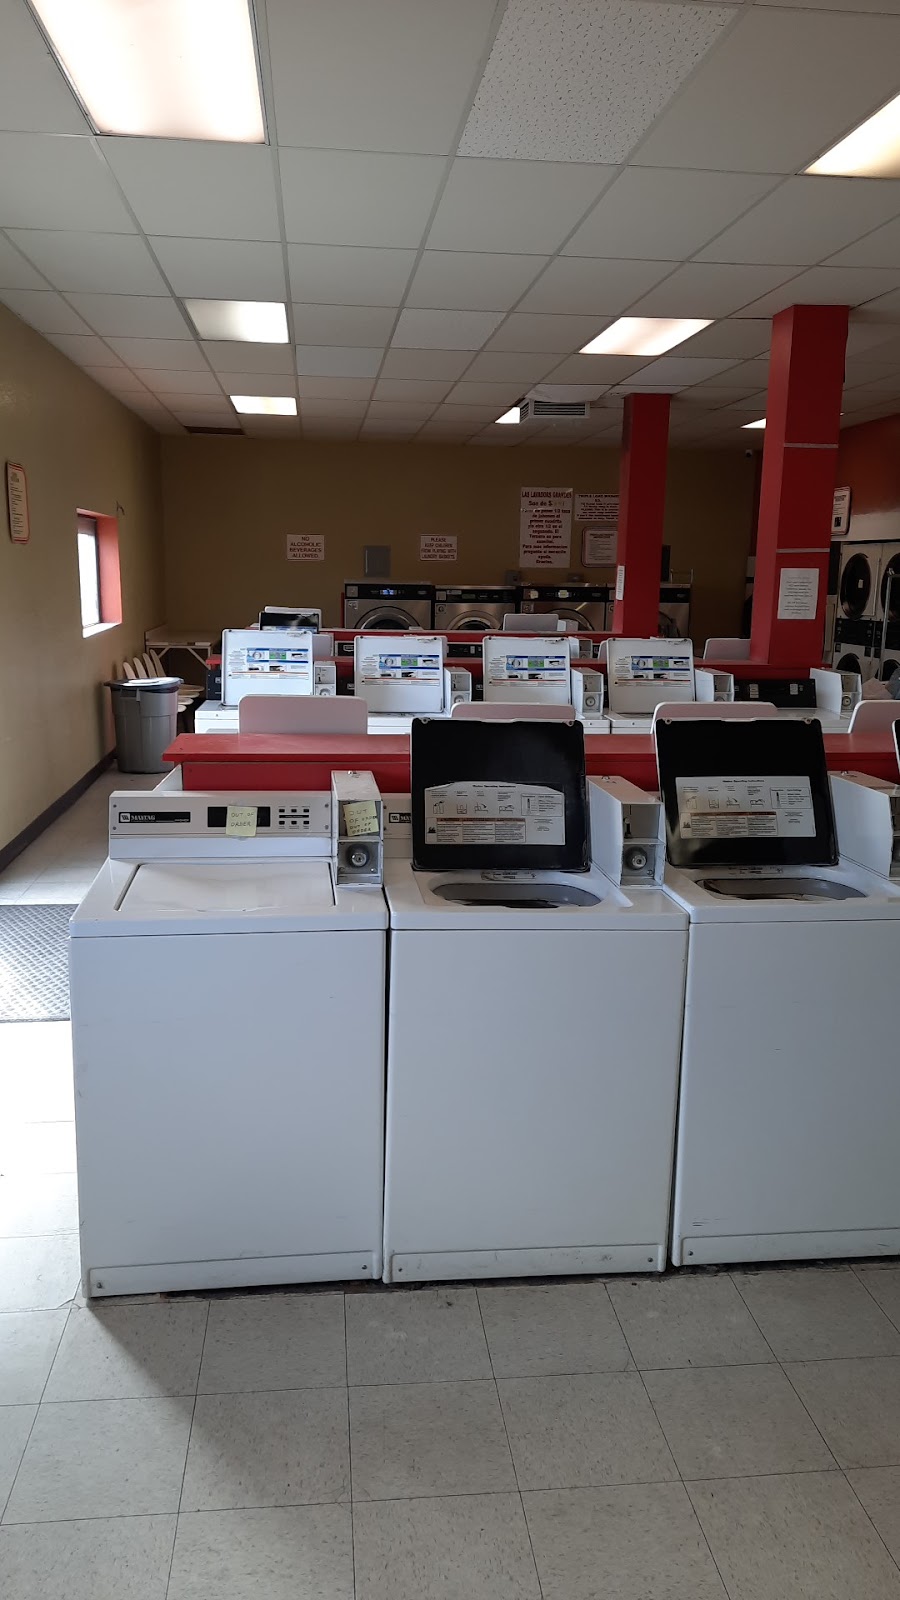 Benson Highway Laundry & Self Storage | 3542 E Benson Hwy, Tucson, AZ 85706, USA | Phone: (520) 294-6588